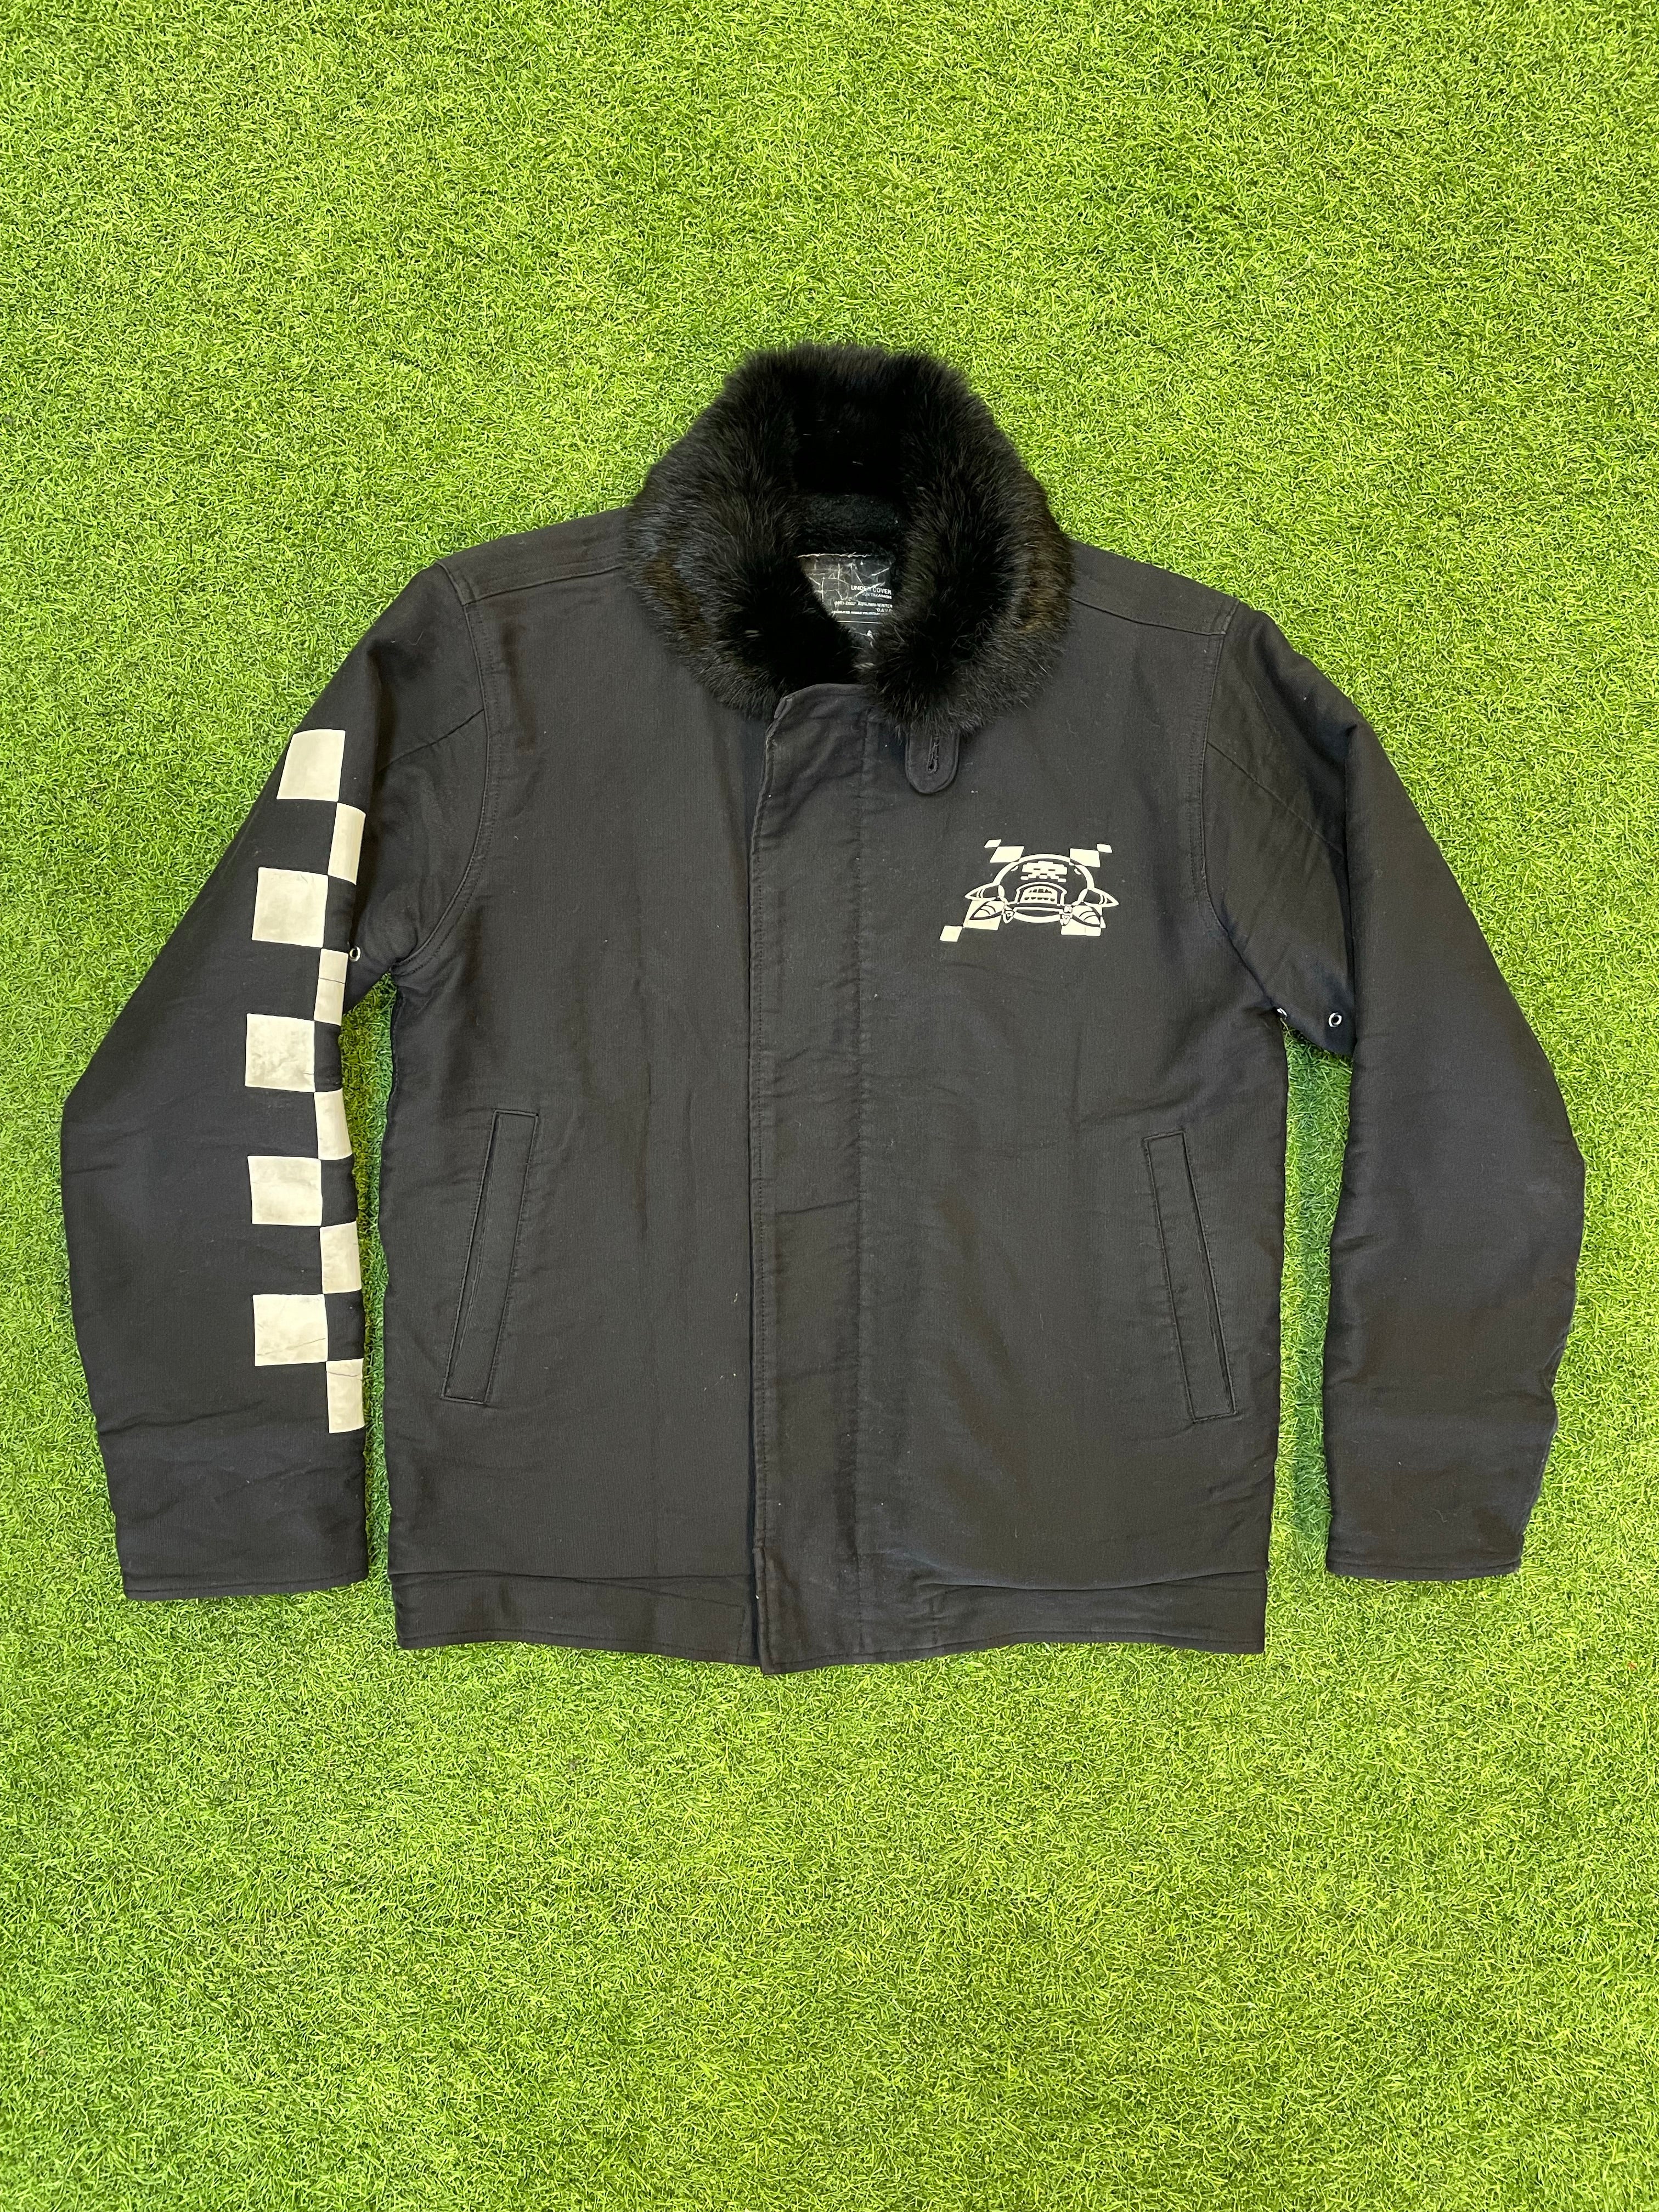 Undercover  DAVF Jacket 2002